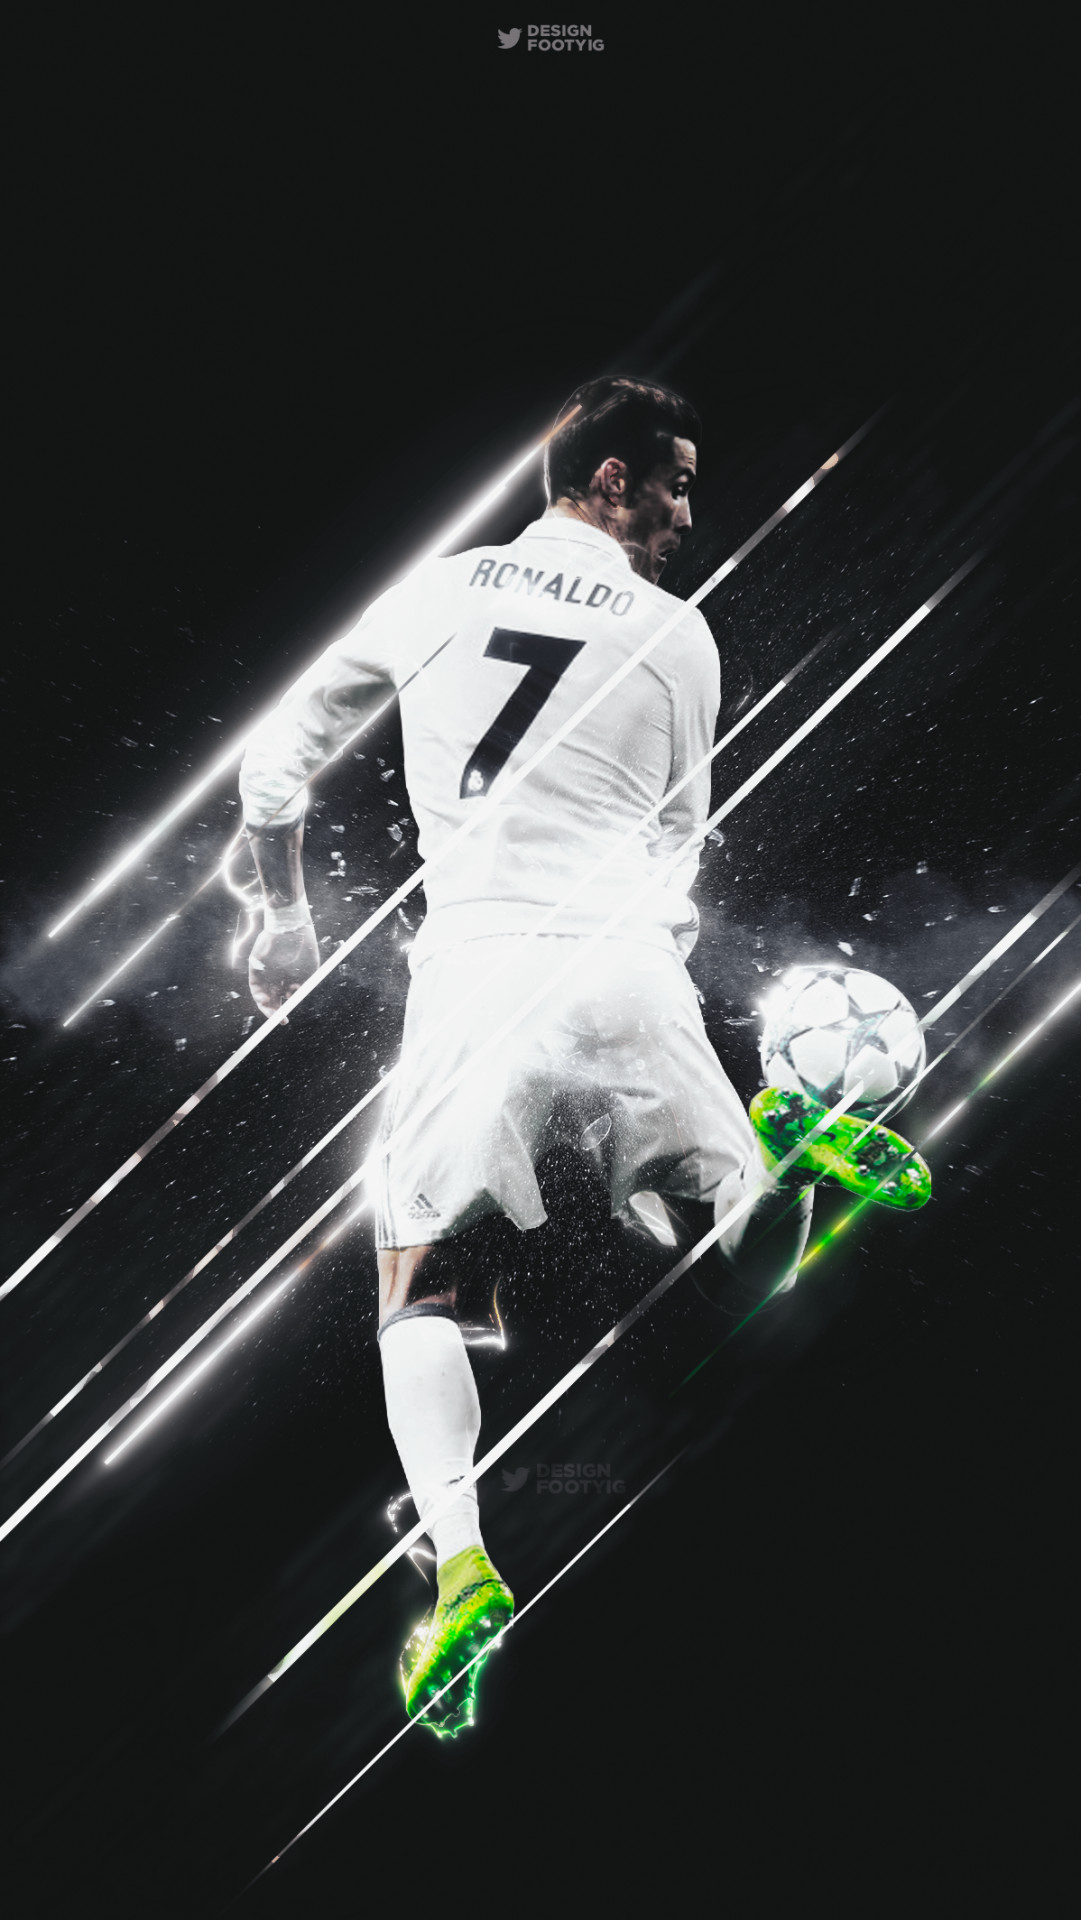 1081x1920 DESIGNDANIEL Cristiano Ronaldo edit / Phone wallpaper by Design Daniel on  tumblr. Real Madrid,